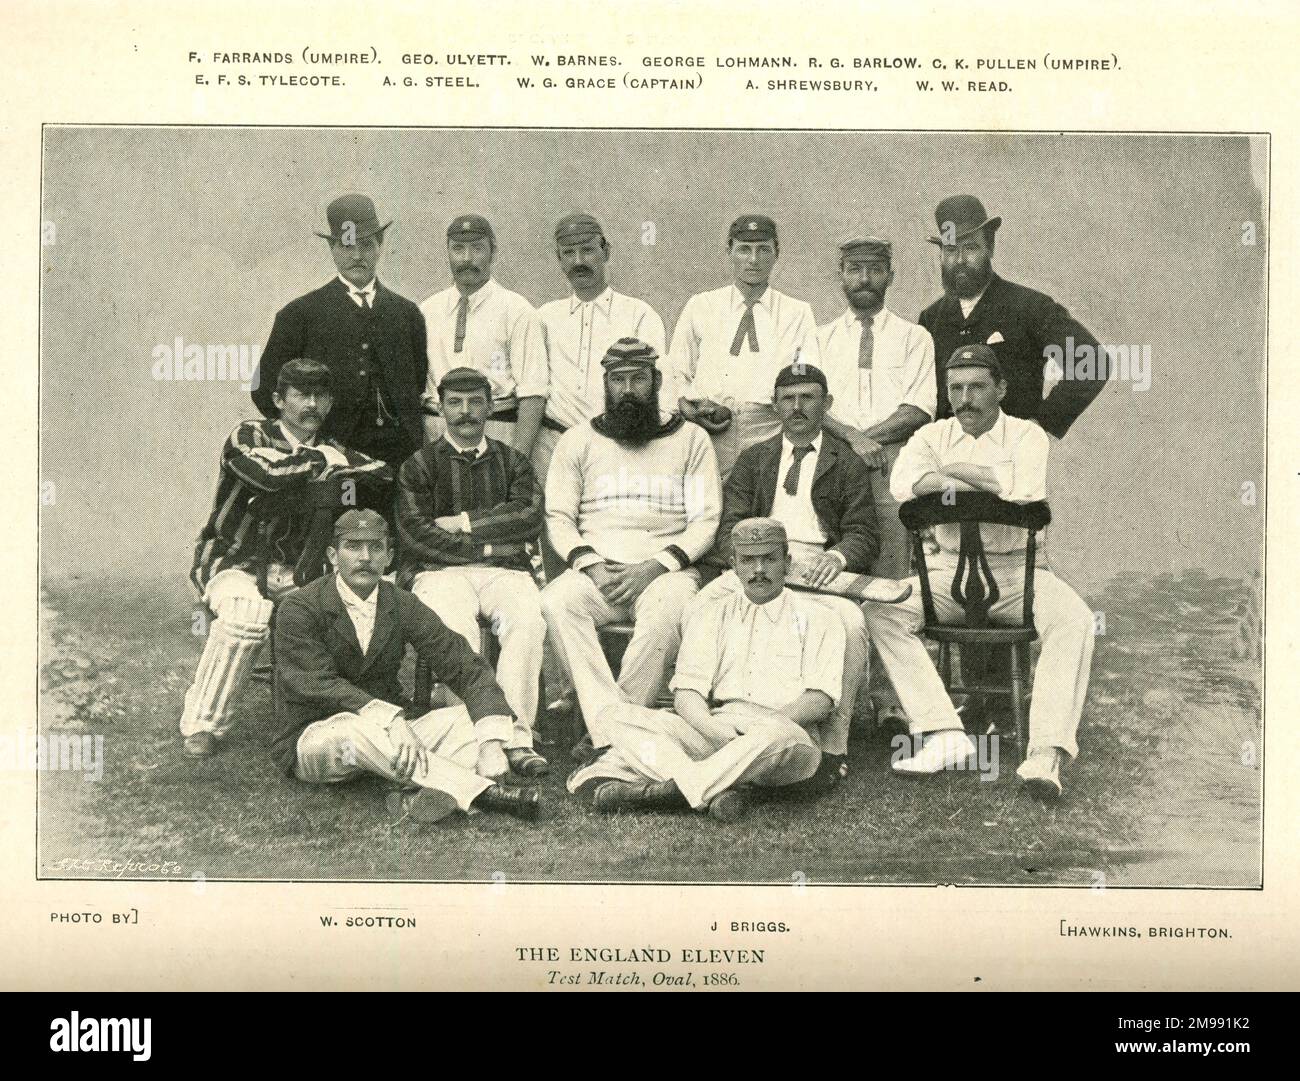 The England Cricket Team, Oval Test Match, 1886. Stock Photo